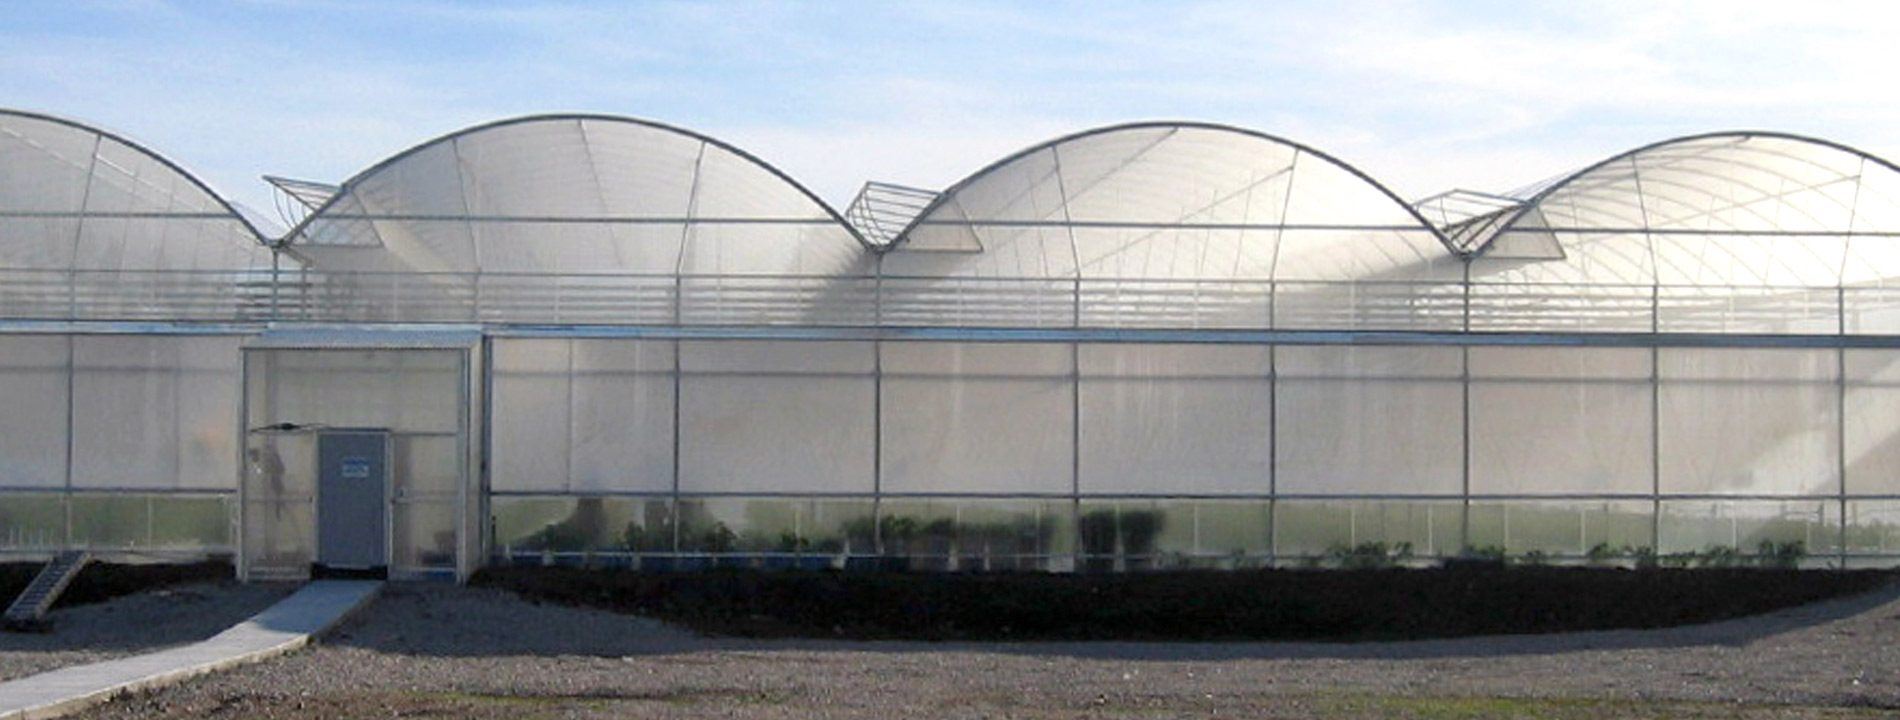 exterior greenhouse